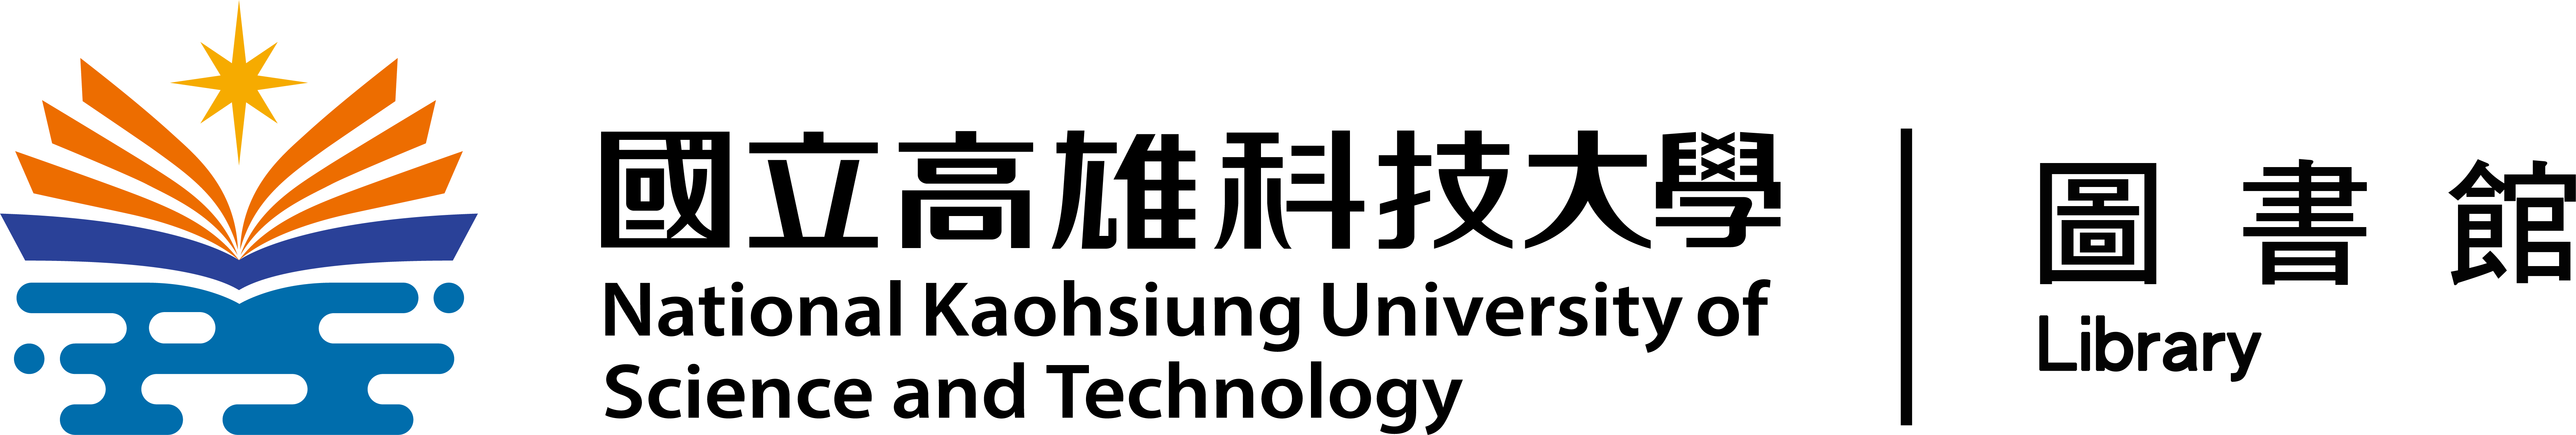 nkust logo